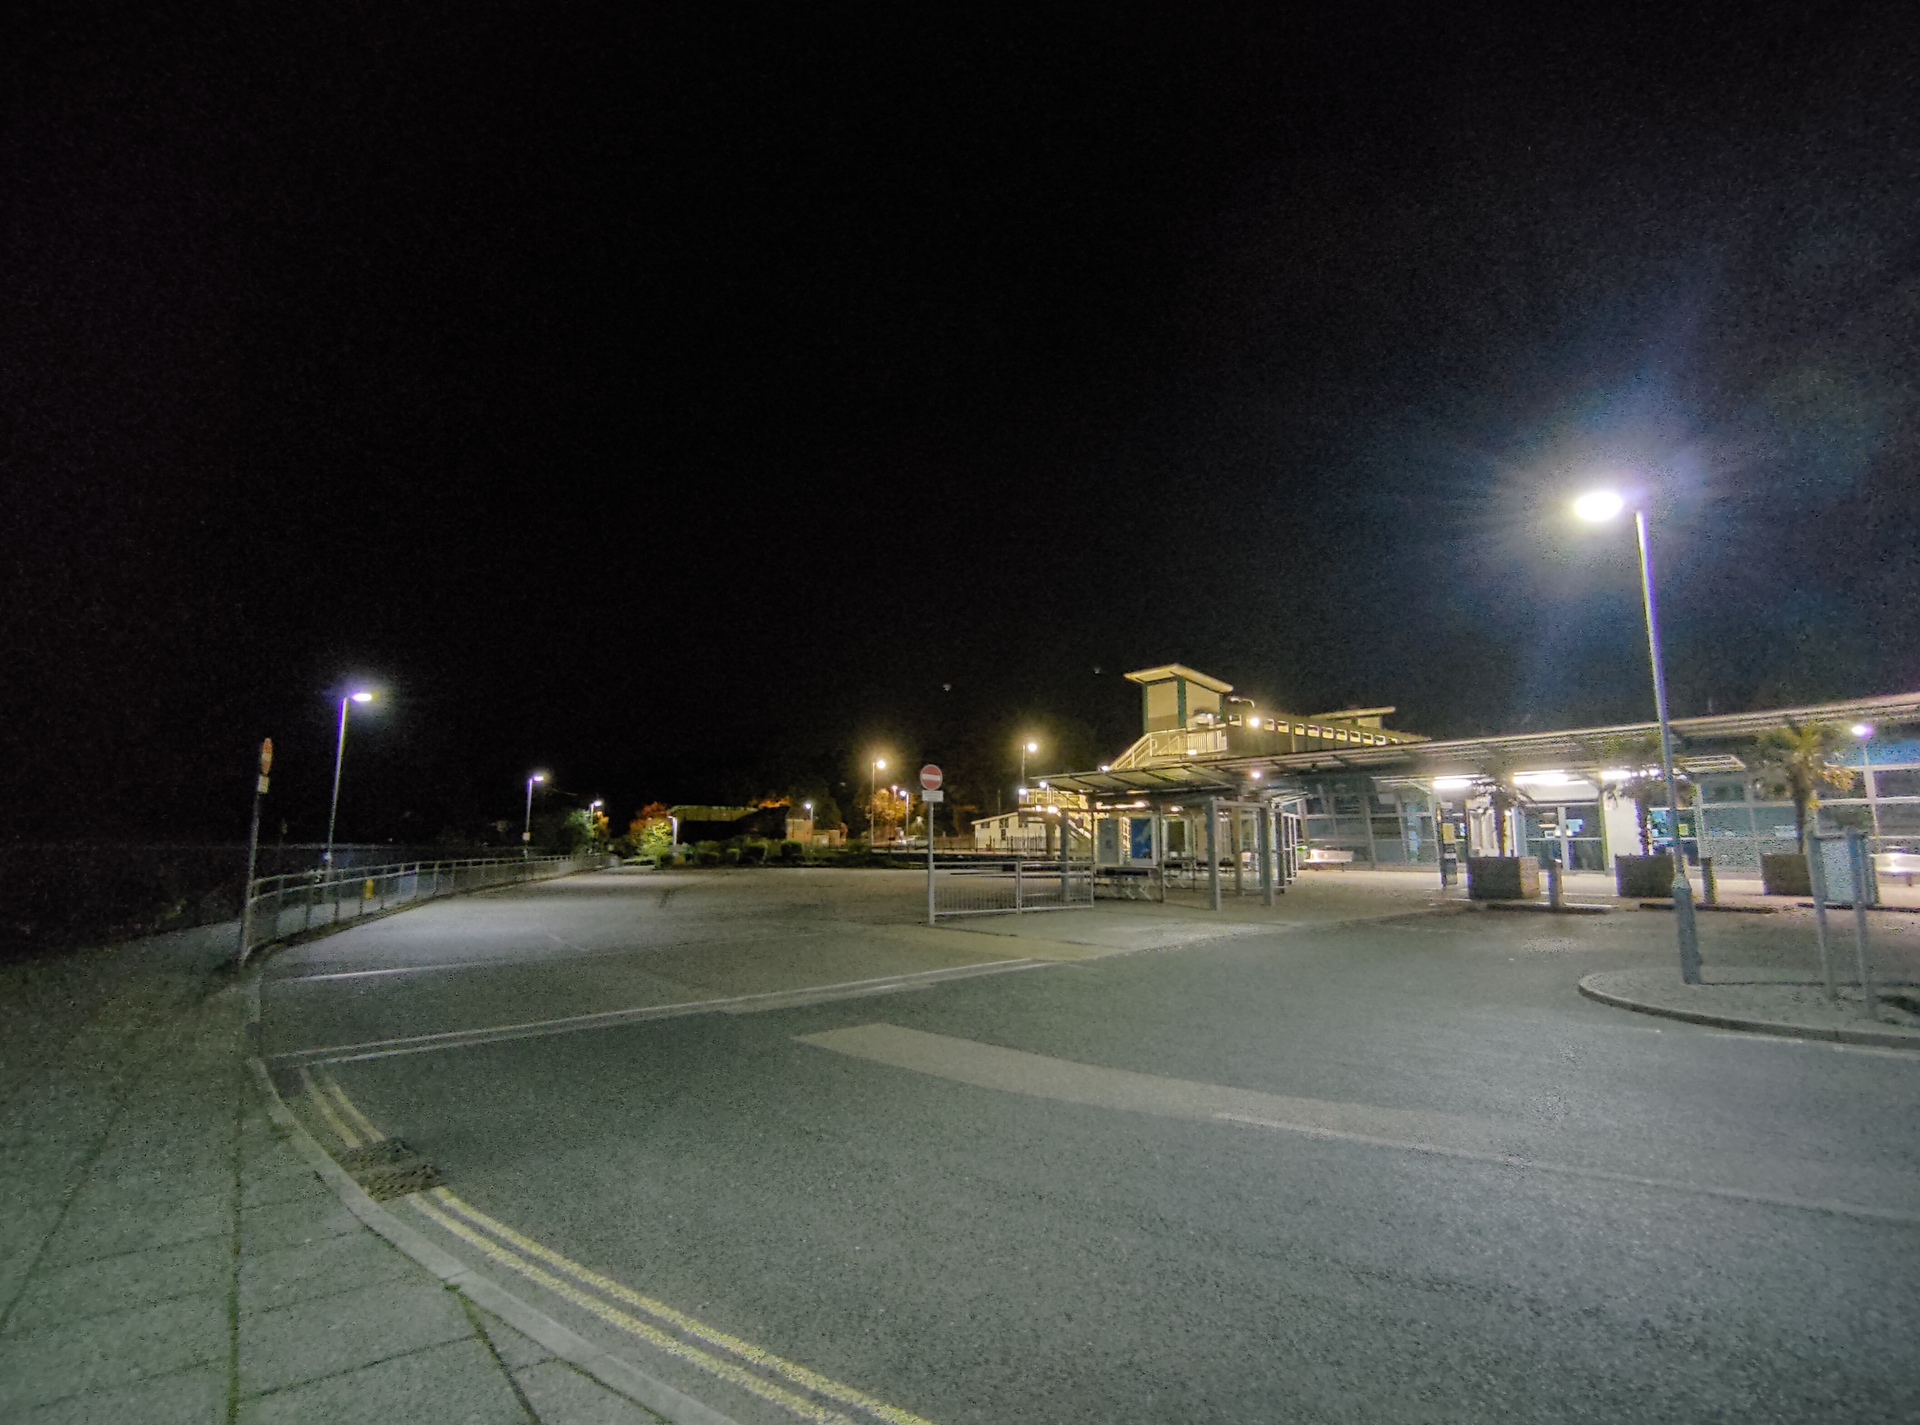 ROG Phone 2 Camera test Night shot in station car park